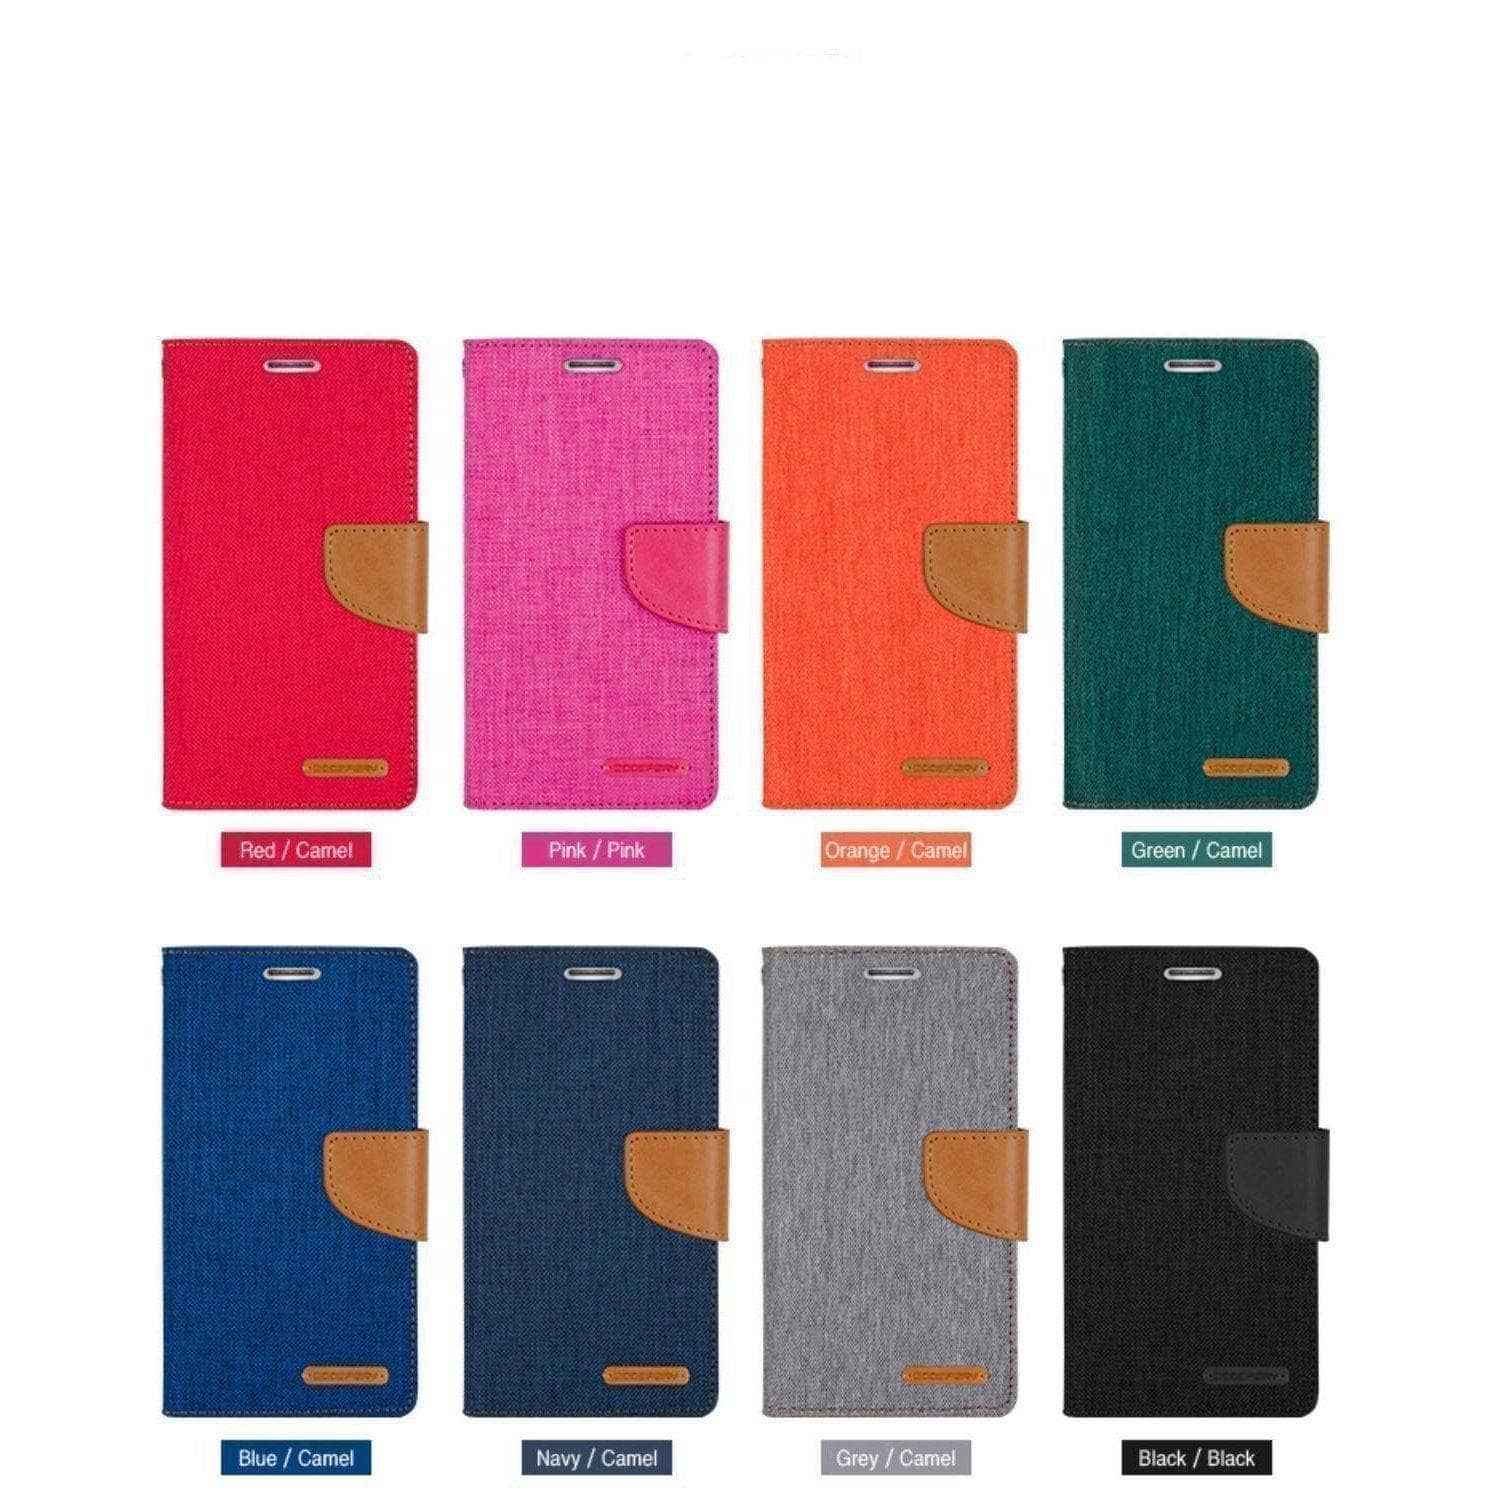 Goospery Denim Canvas Cover Leather Wallet Flip Card Samsung Galaxy S9+ S8+-Phone Case-Goospery-www.PhoneGuy.com.au